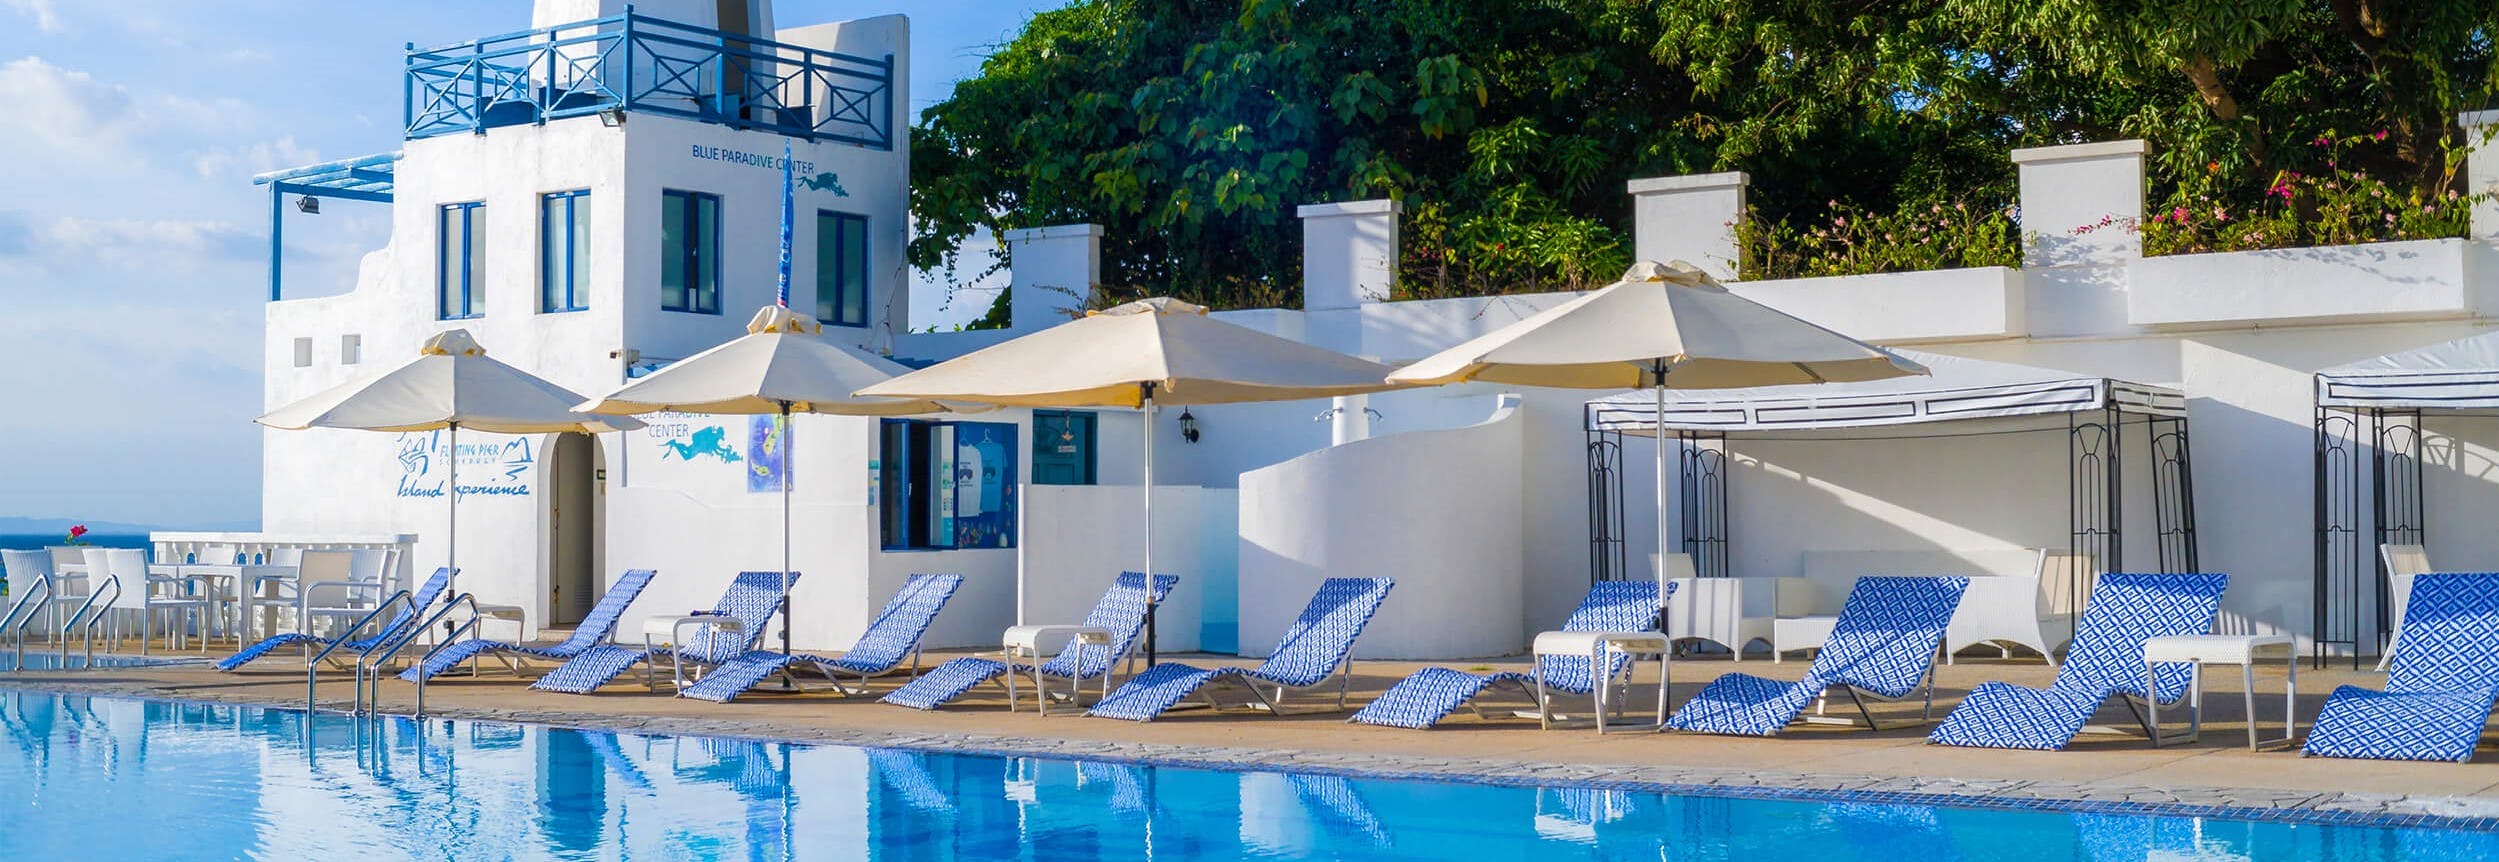 Poolside of Camp Netanya Resort & Spa1.jpg